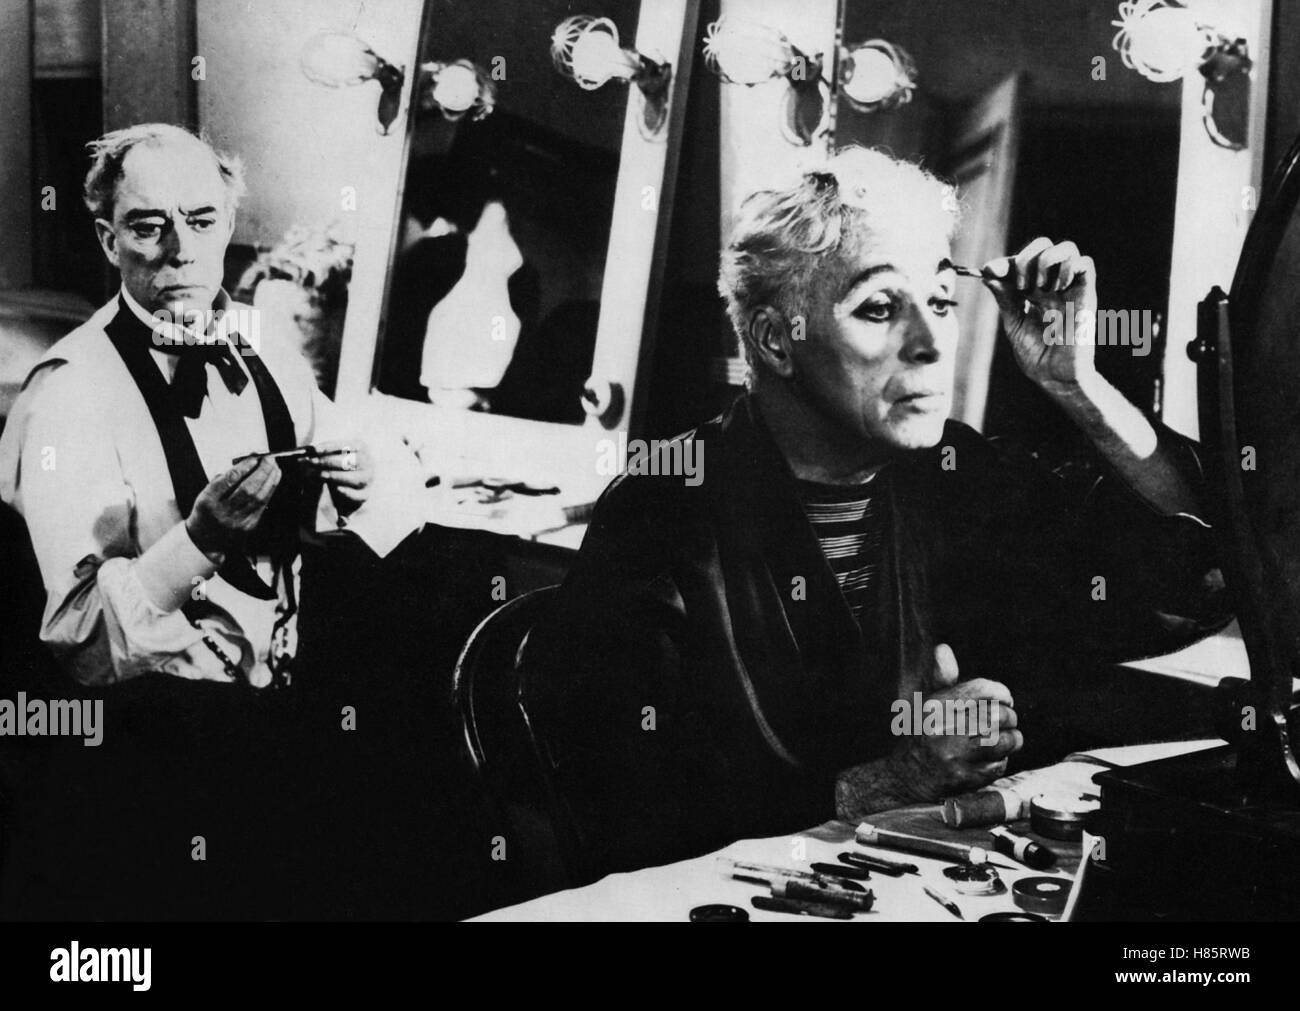 Rampenlicht, (ribalta) USA 1952 s/w, Regie: Charles Chaplin, Buster Keaton, Charles Chaplin Foto Stock